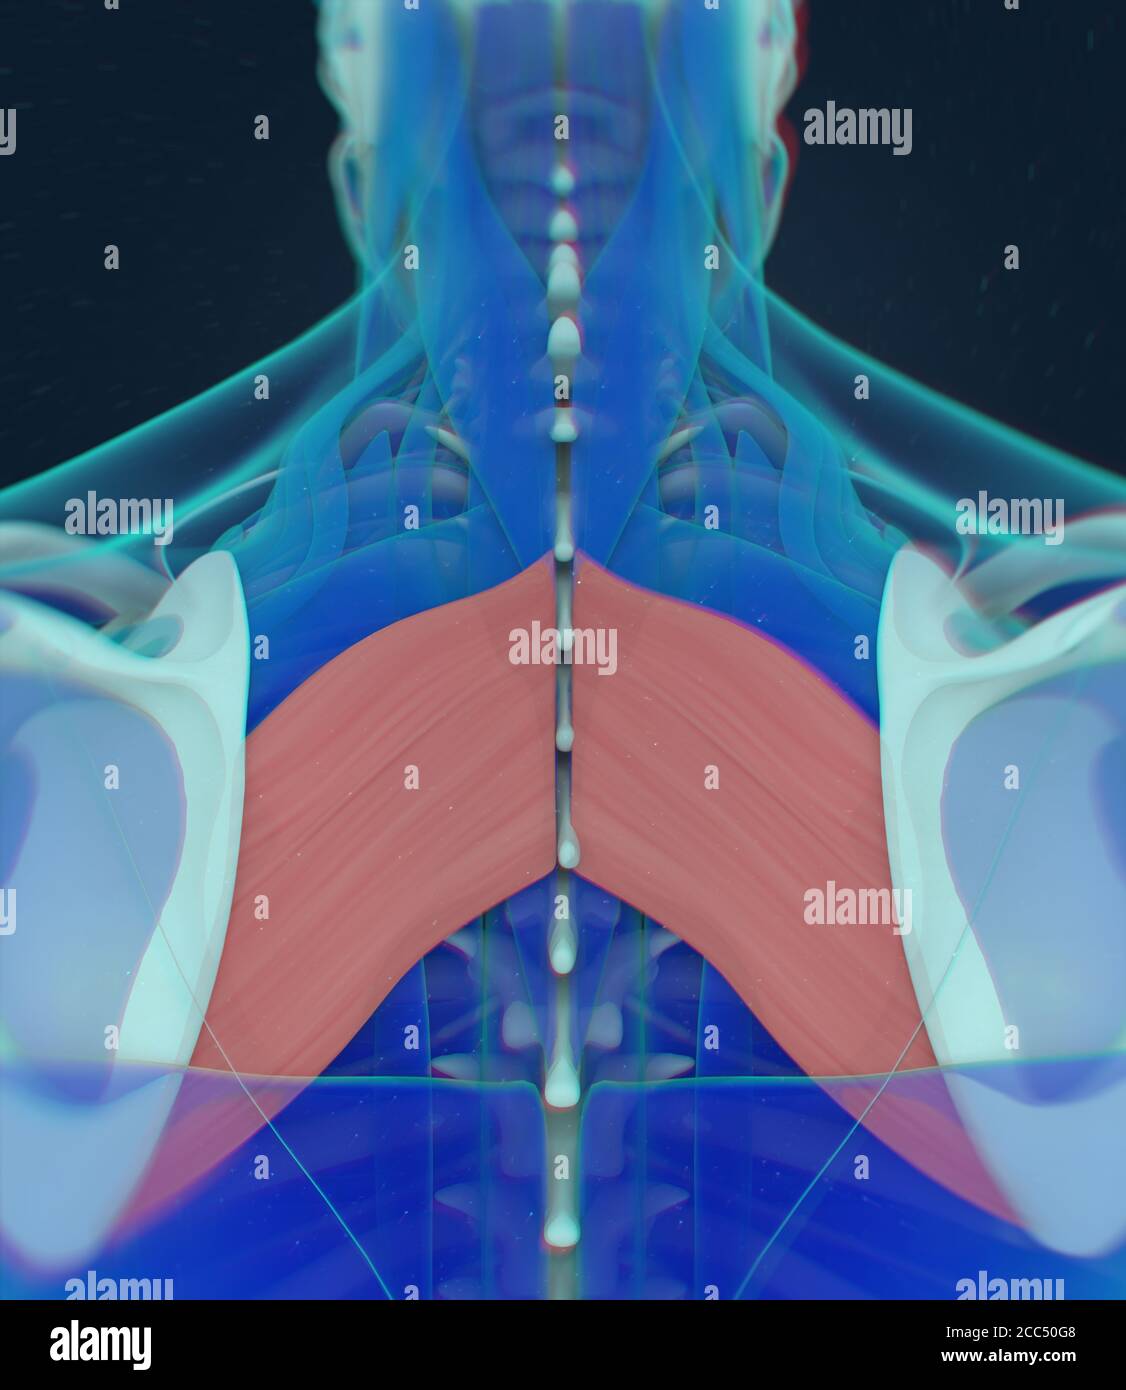 Anatomiedarstellung des Rhomboiden major.Röntgenscan des menschlichen Muskelkörpers. 3D-Illustration. Stockfoto